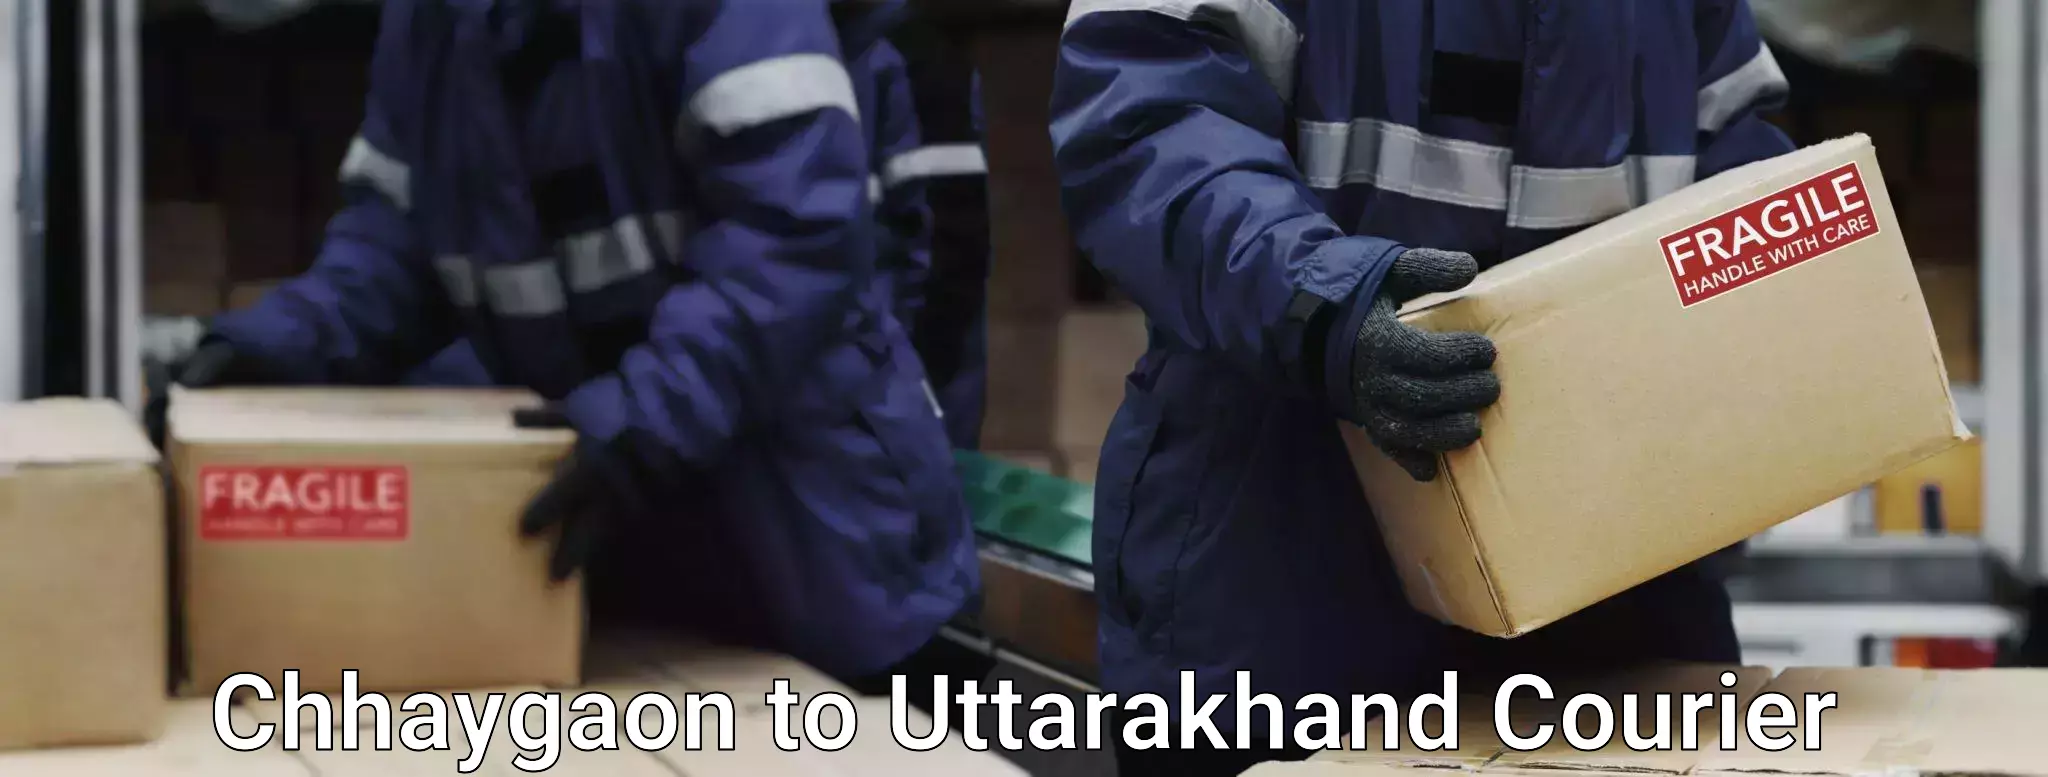 Baggage shipping experts Chhaygaon to Uttarakhand